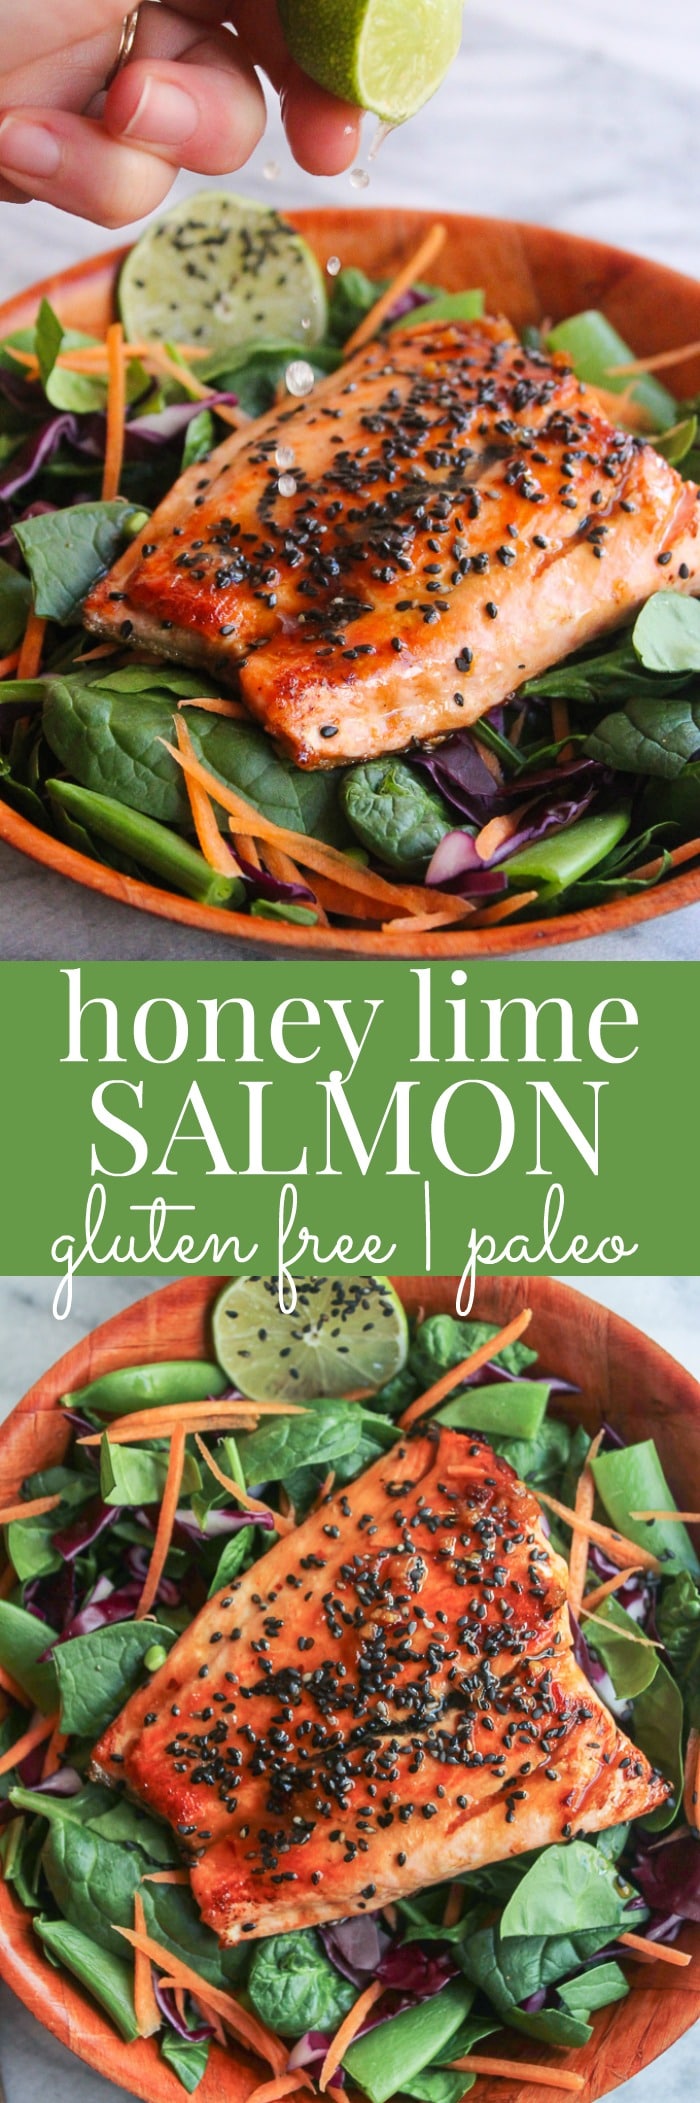 Honey Lime Salmon | gluten free & paleo friendly